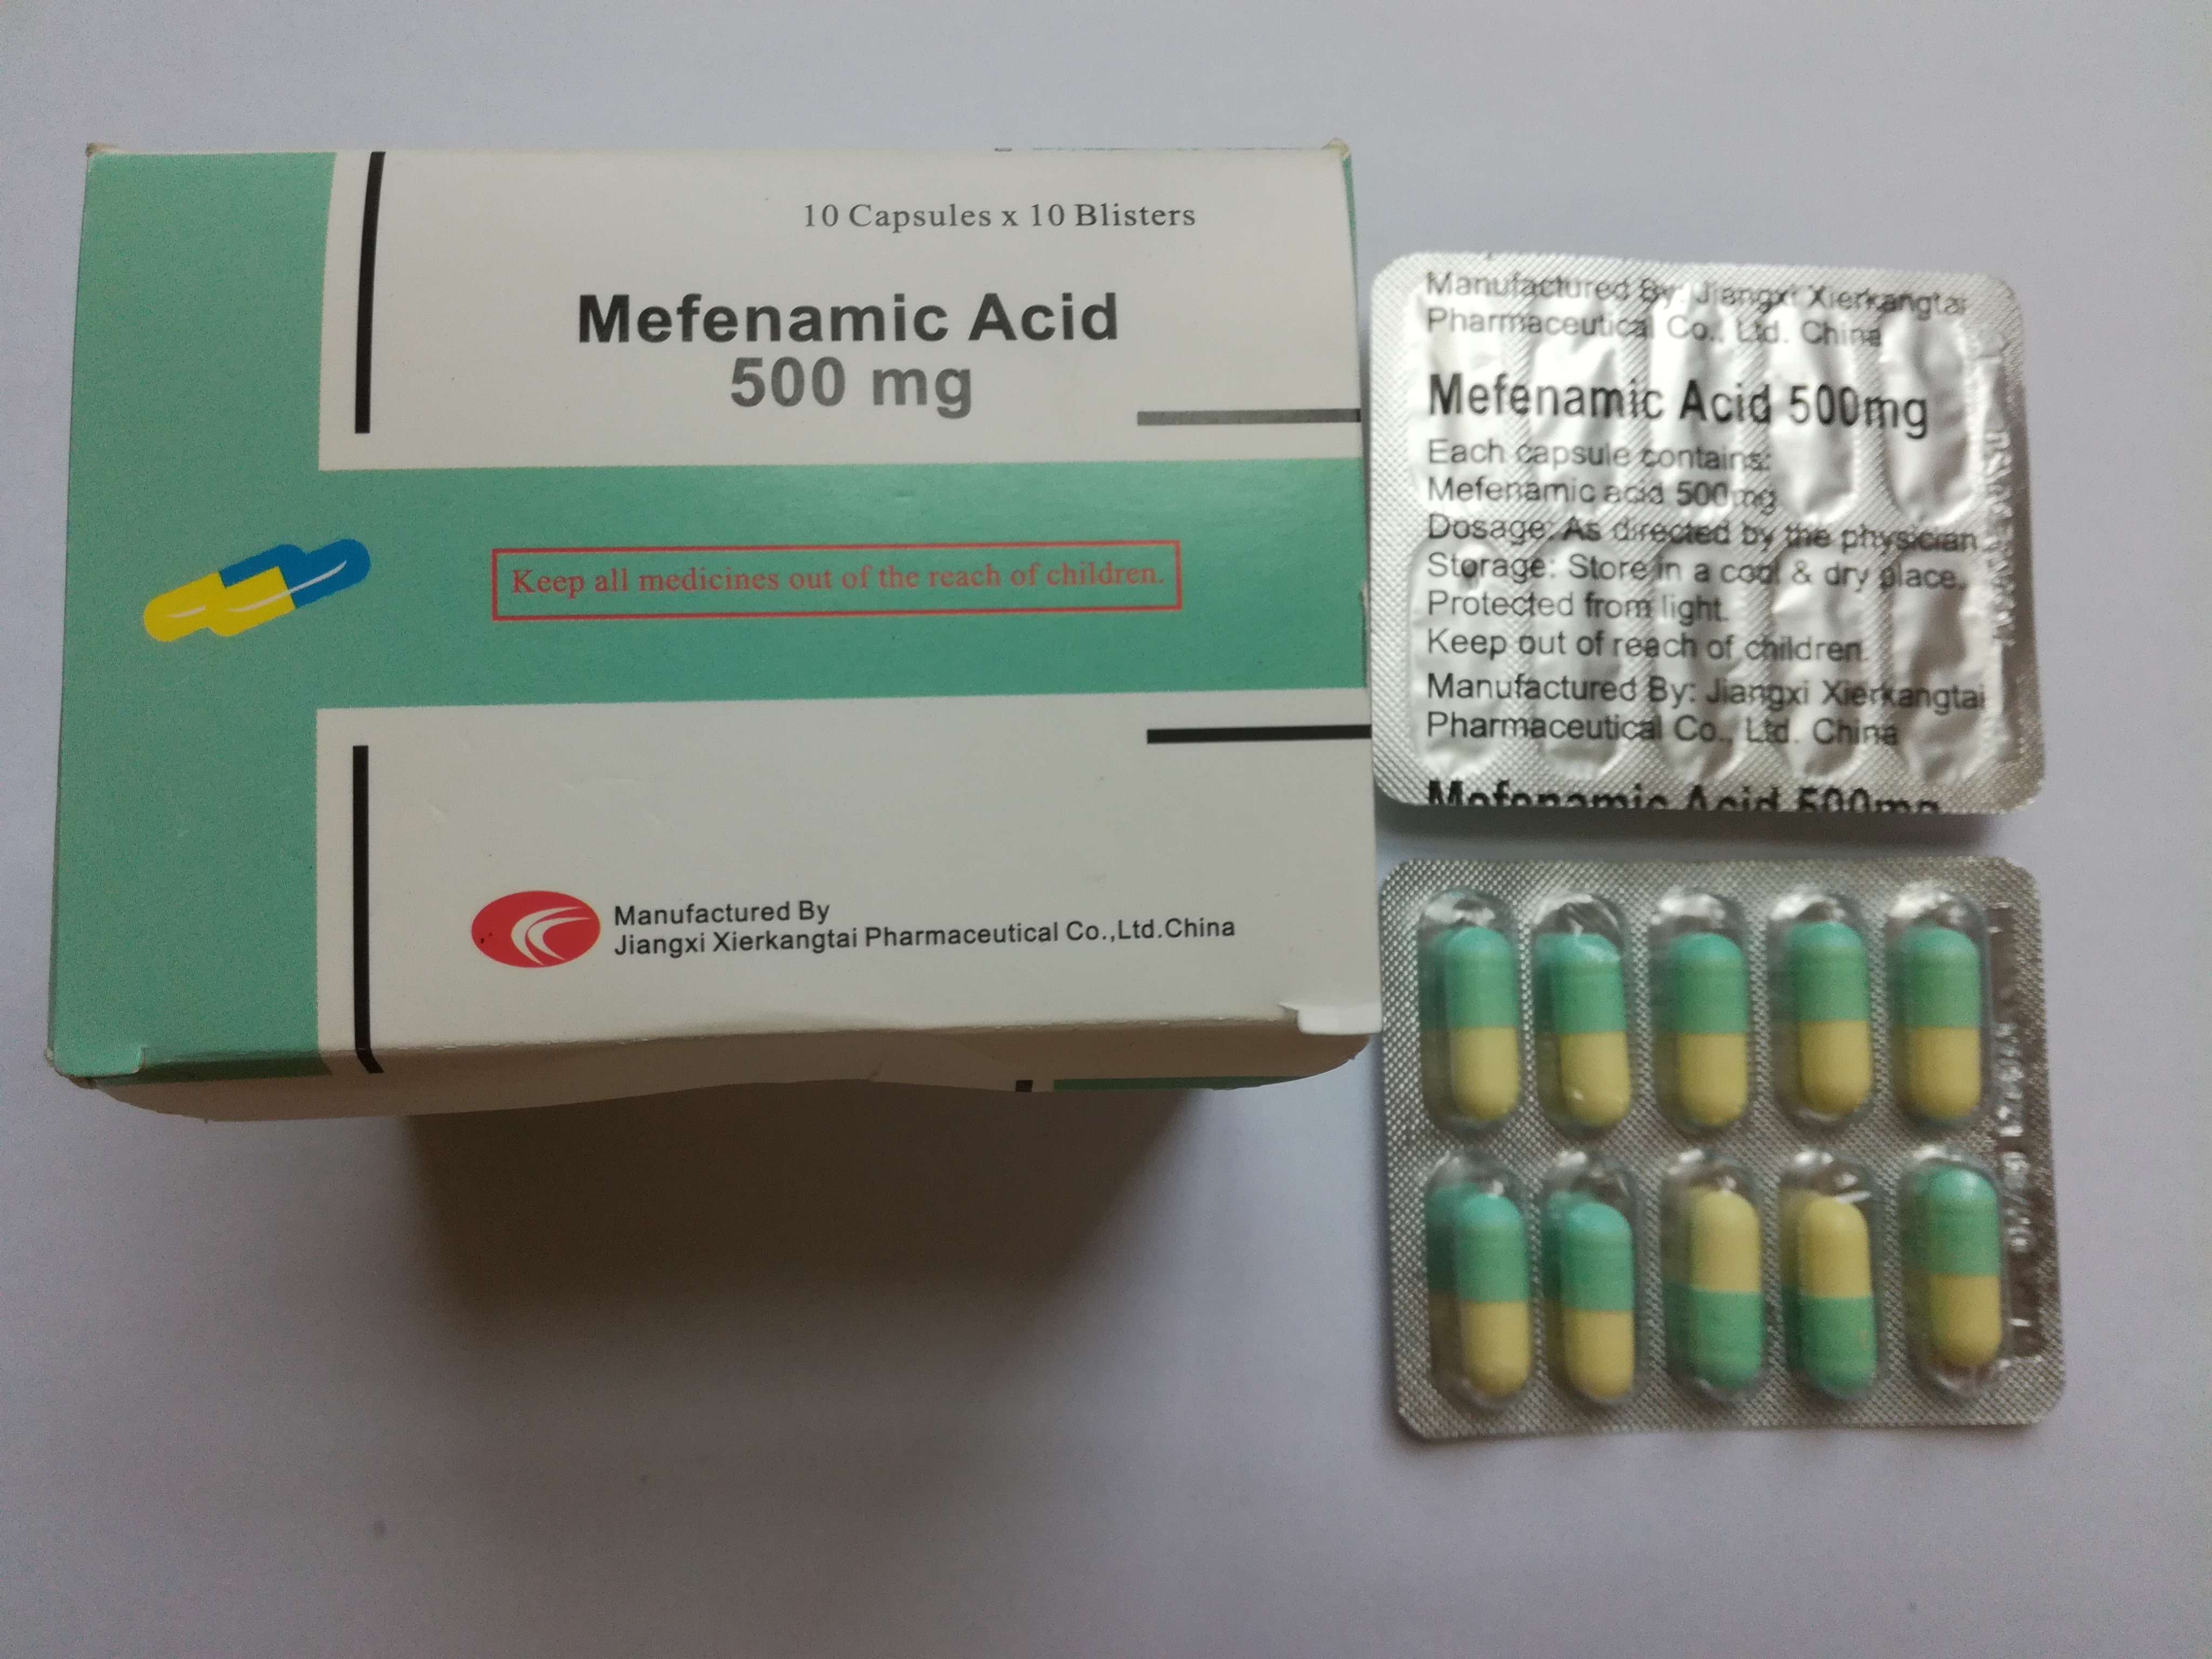 Mefenamic acid 500mg